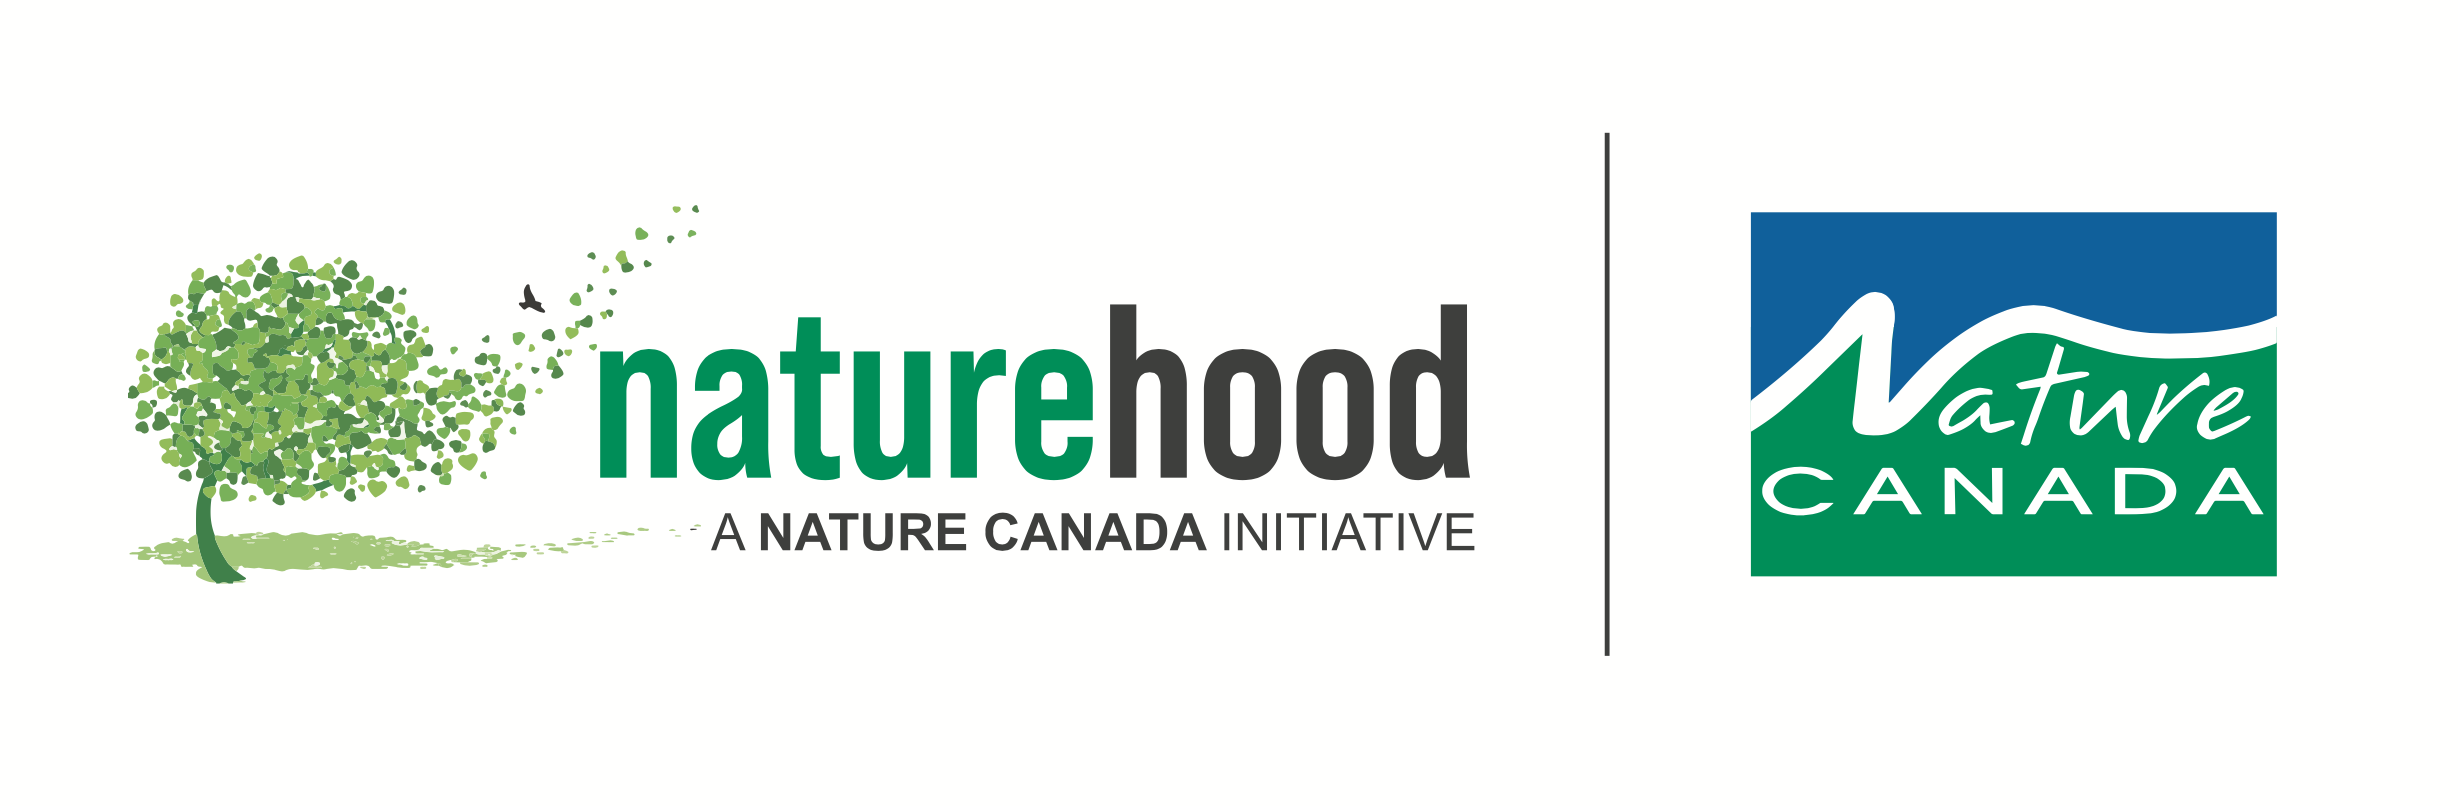 NatureHood Nature Canada Logo